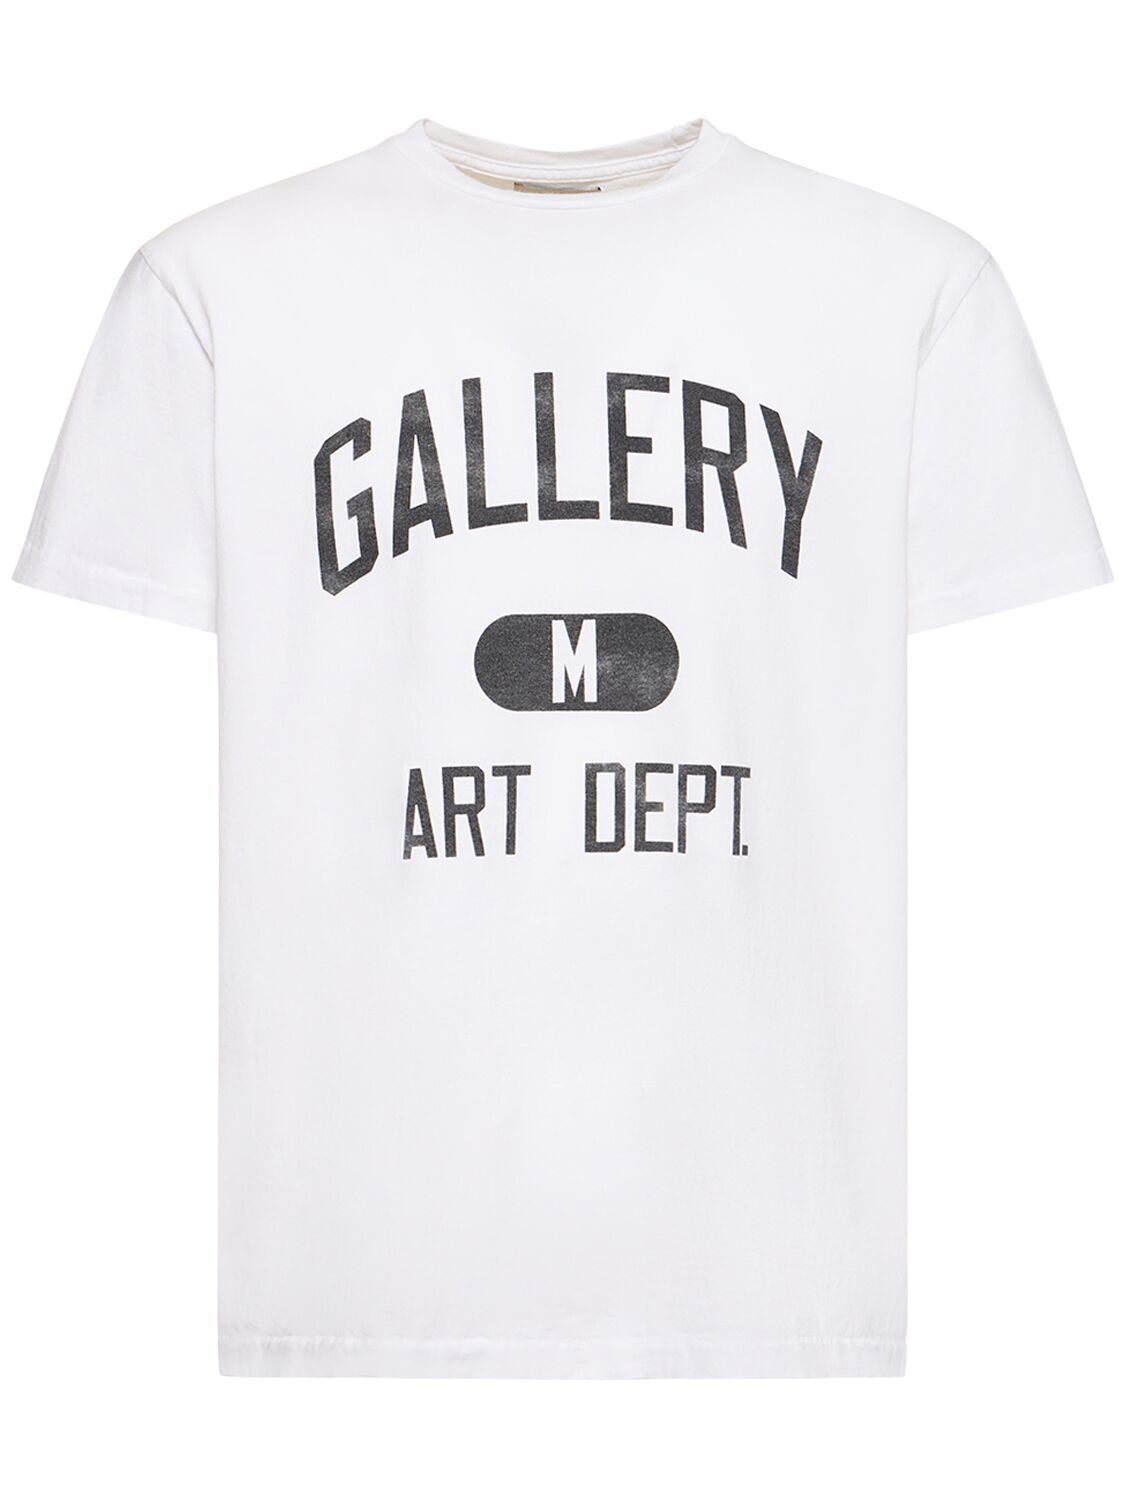 Image of Art Dept. T-shirt